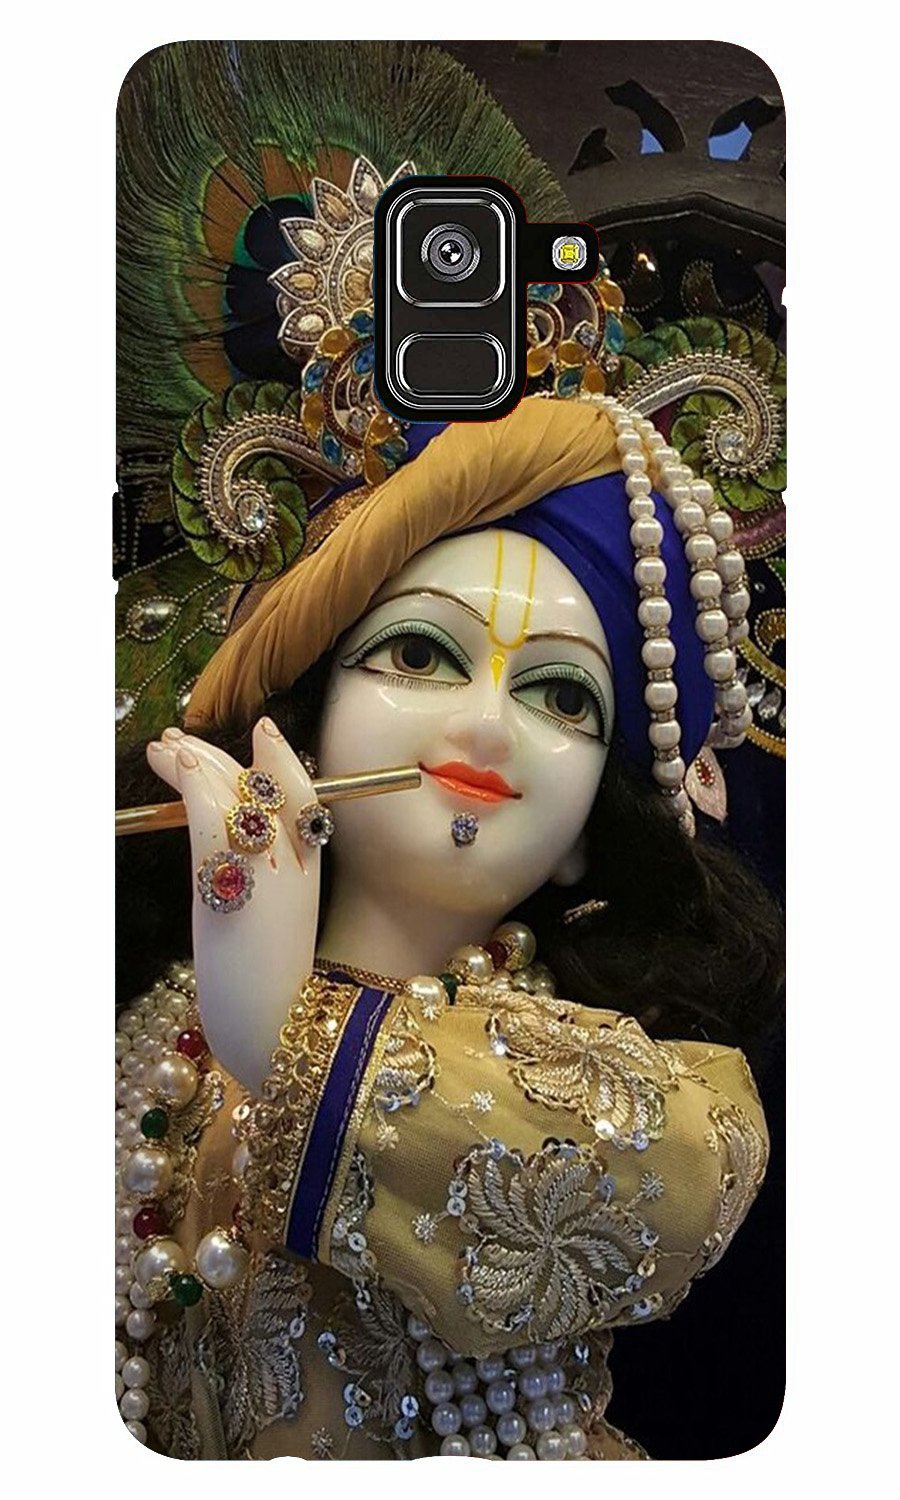 Lord Krishna3 Case for Galaxy A5 (2018)